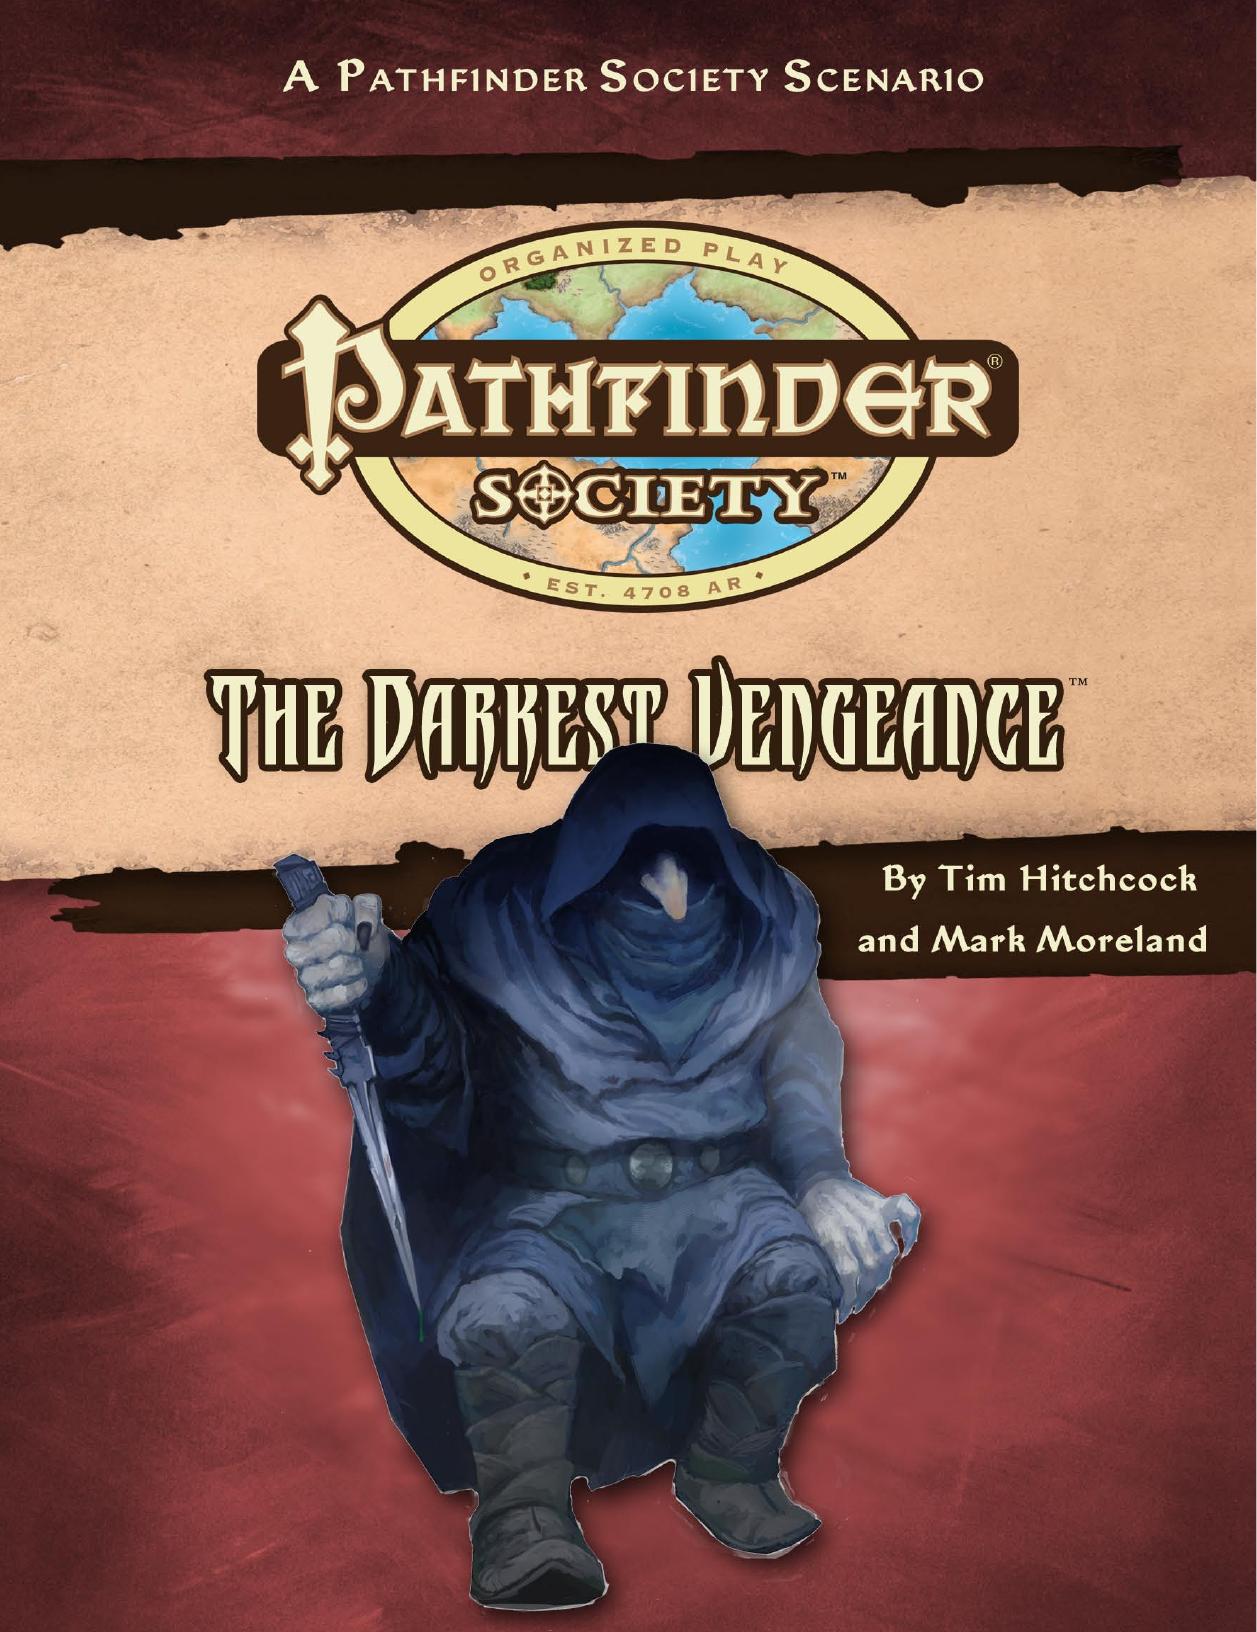 Pathfinder Society: The Darkest Vengance